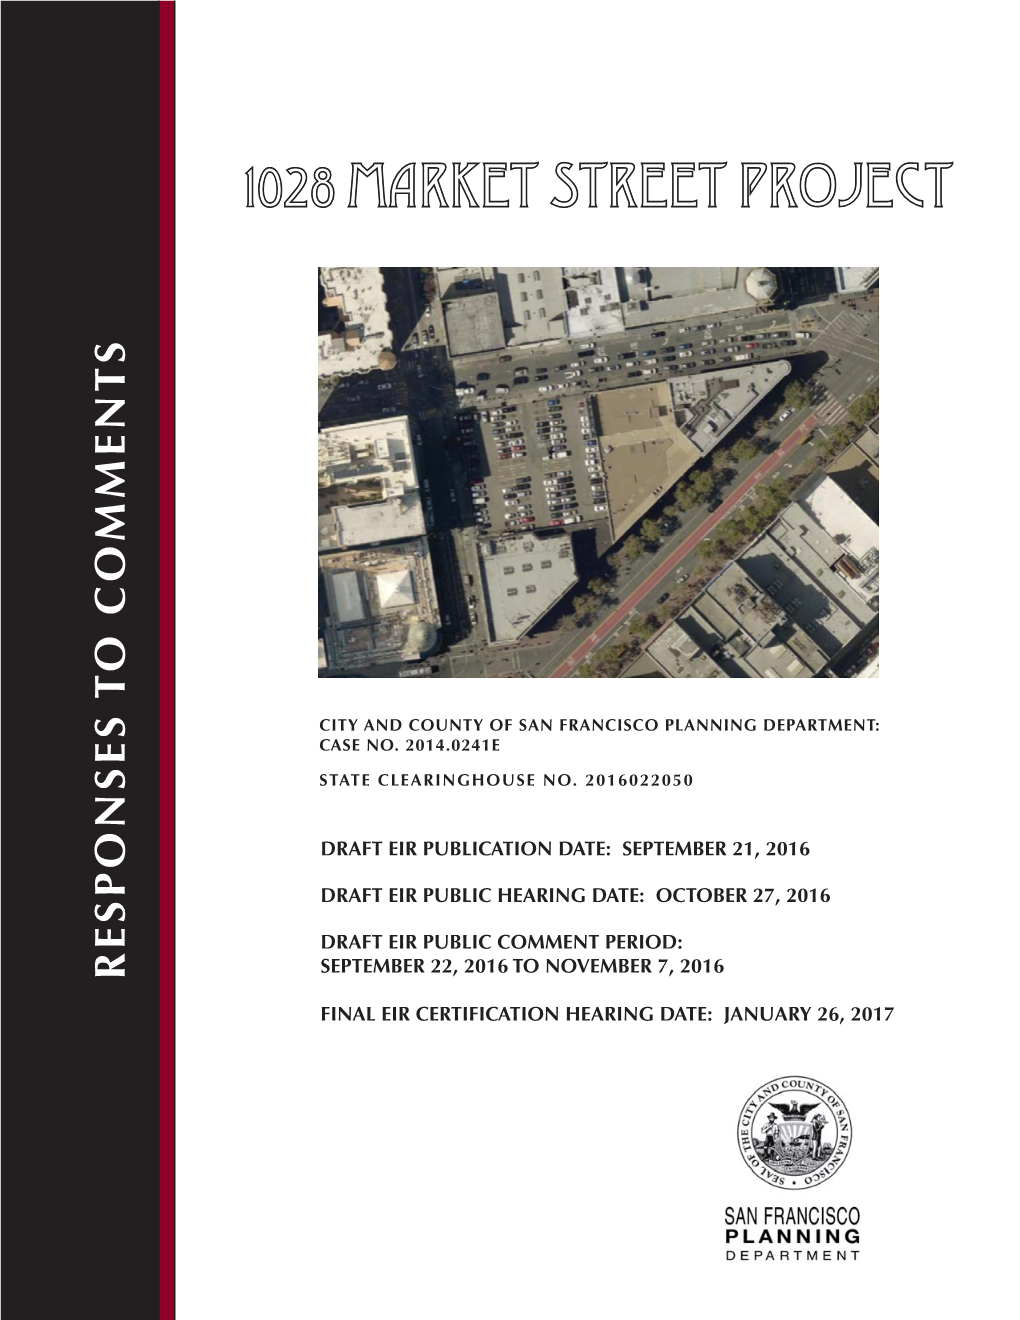 2014.0241E: 1028 Market Street Project